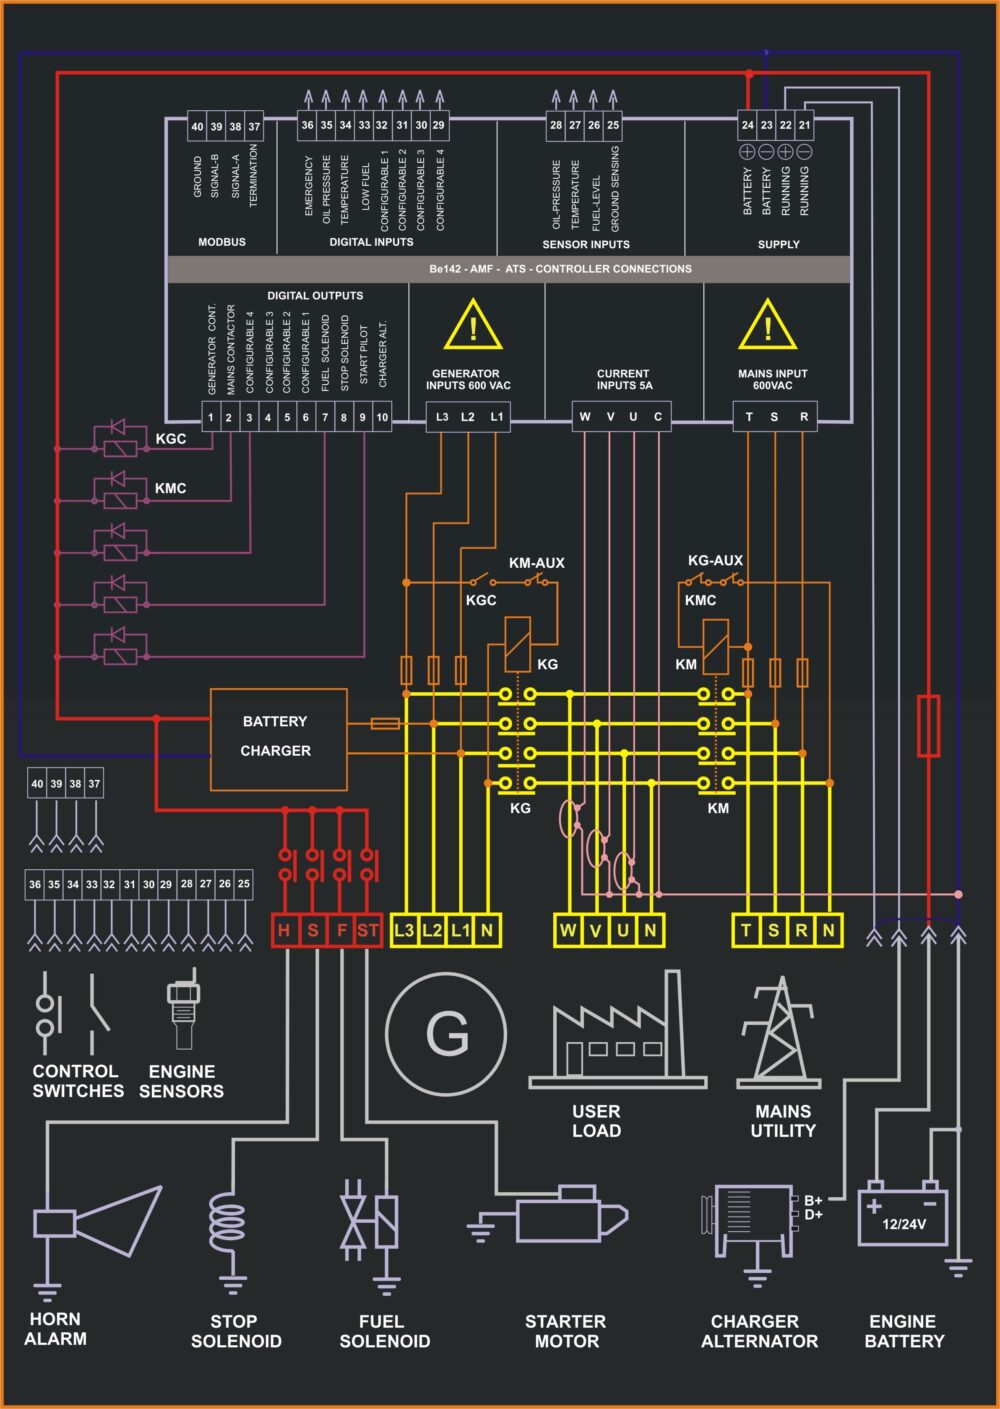 AMF Control Panel Circuit Diagram Be142